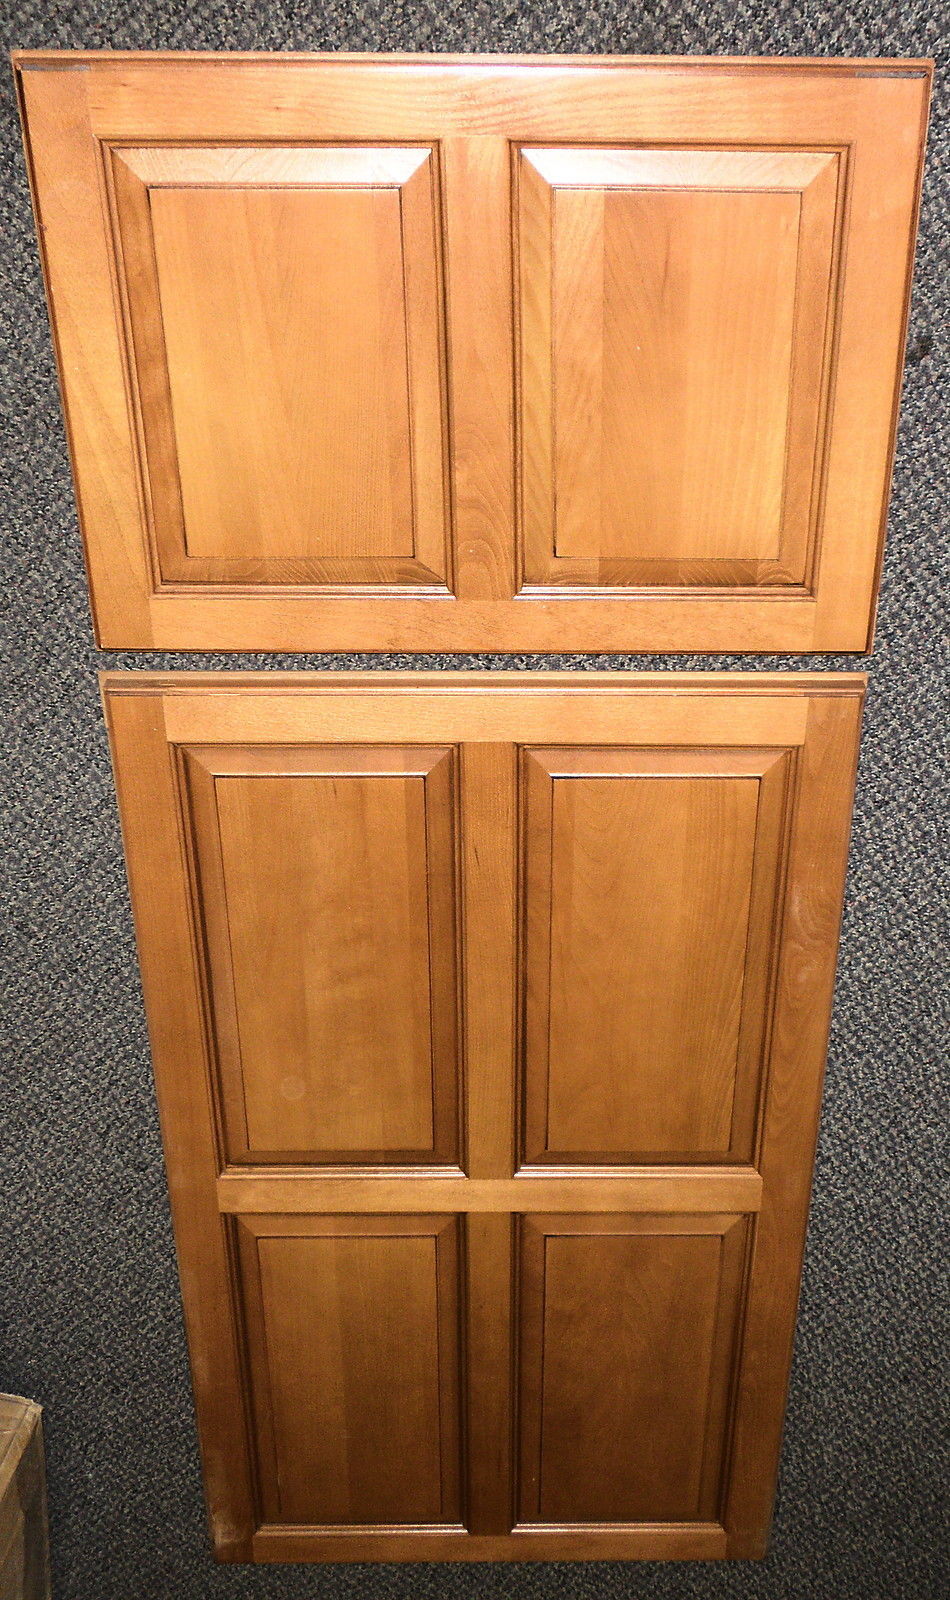 6 Panel Solid Wood Refrigerator Door Insert Set - Interior